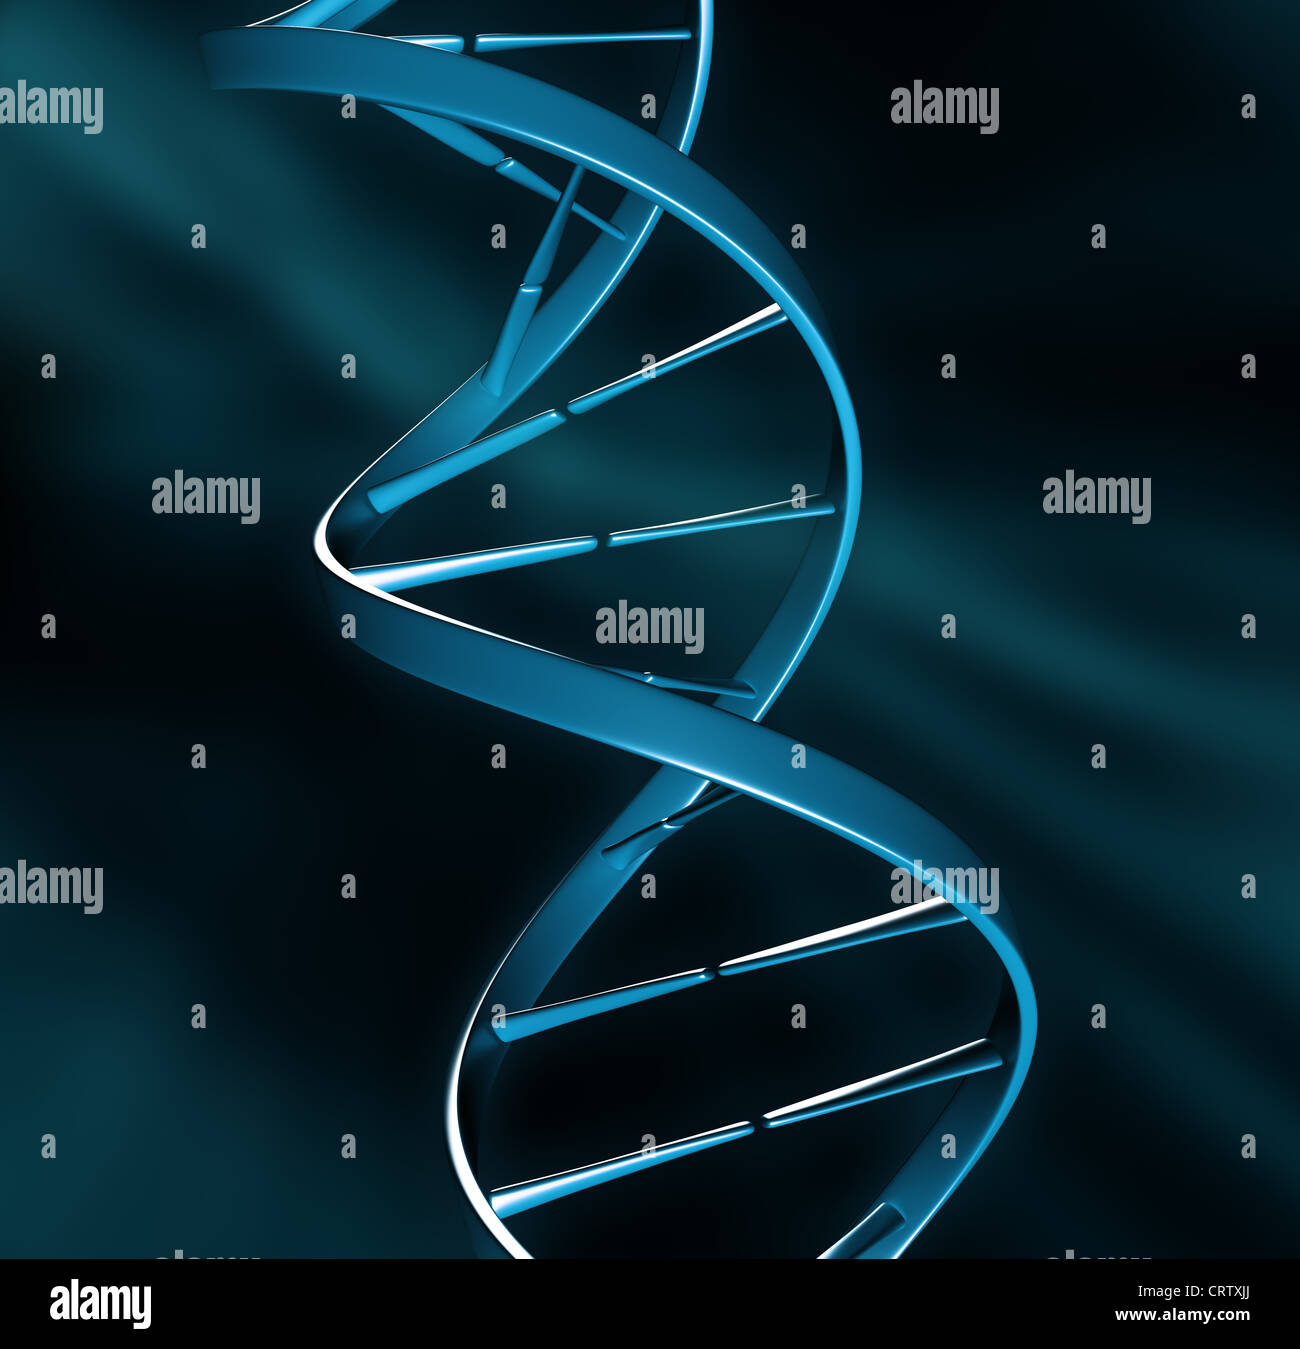 DNA strand illustration Stock Photo